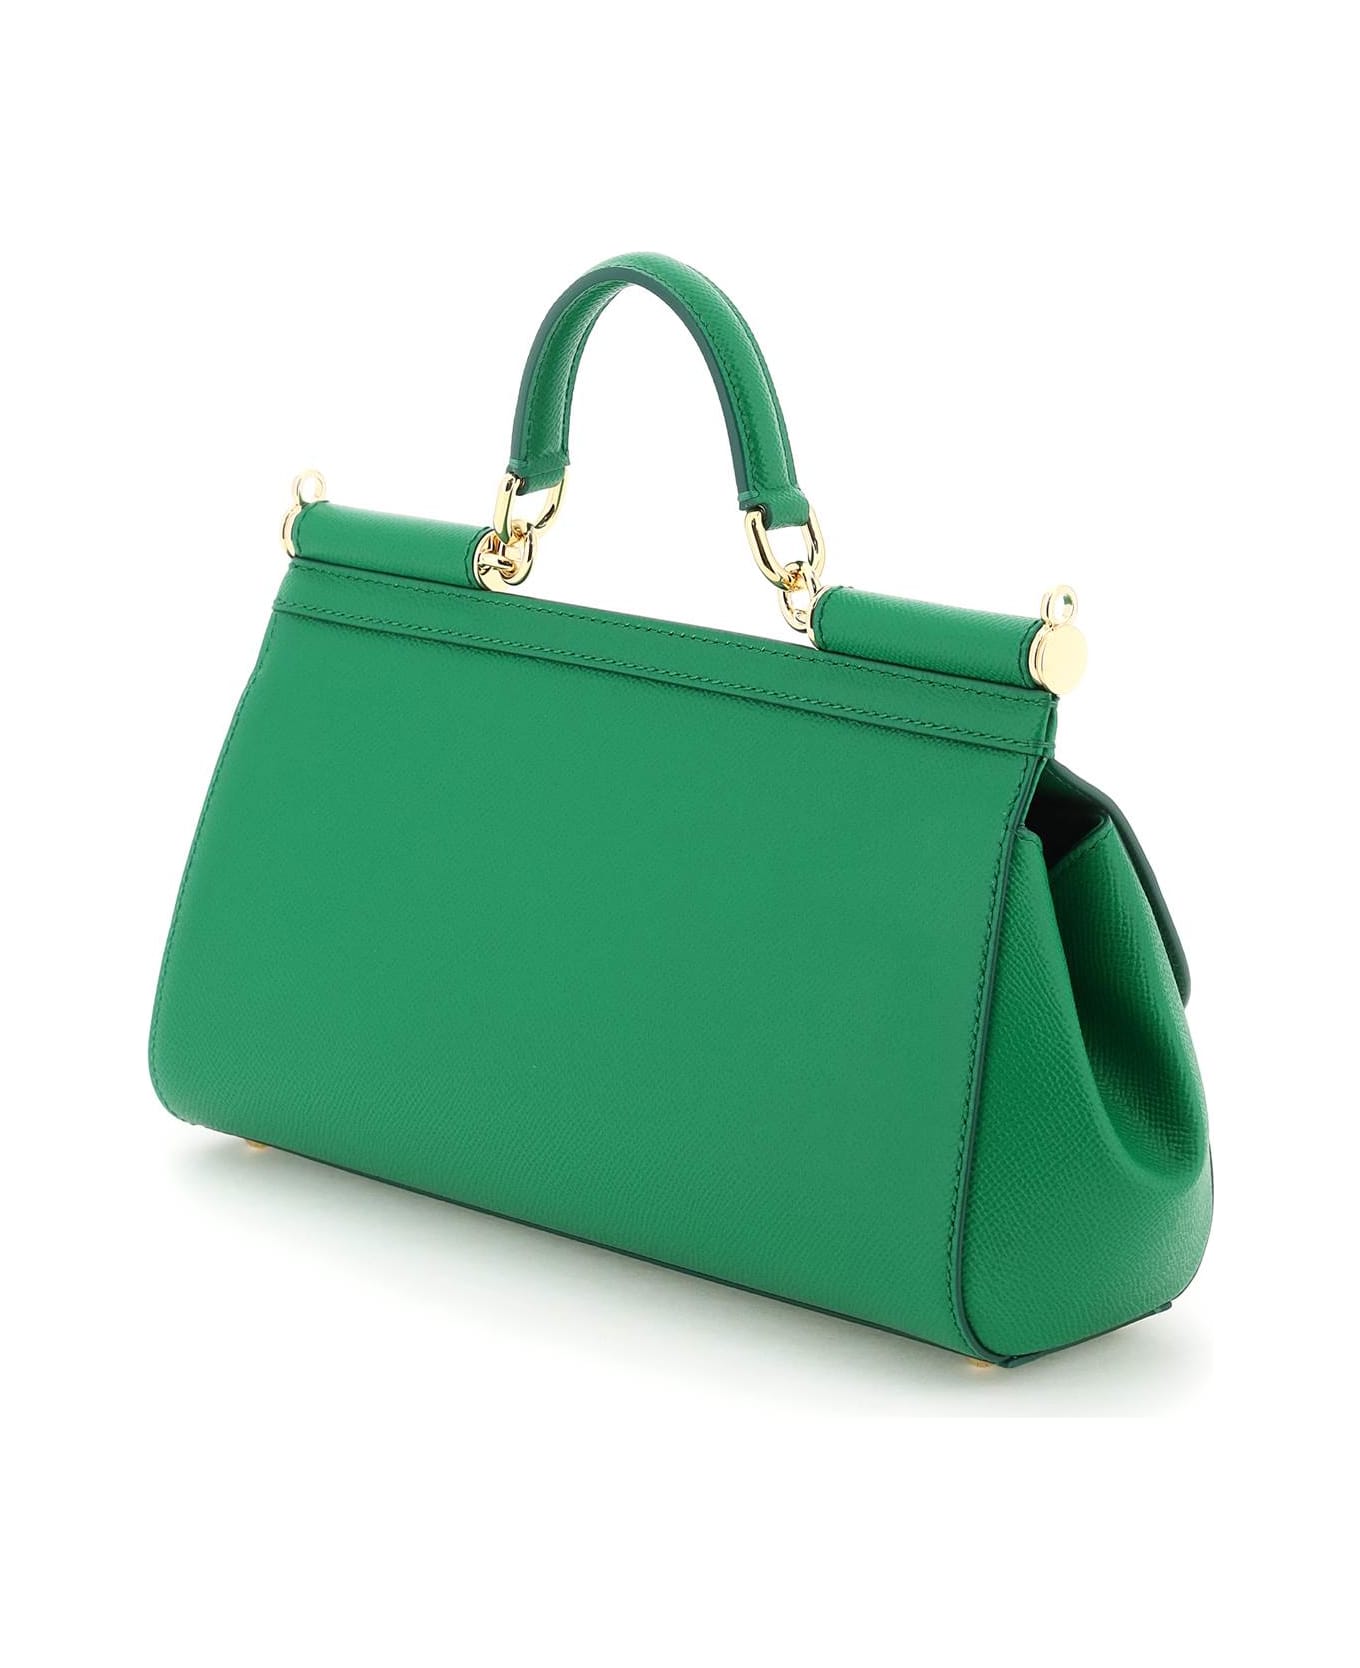 Dolce & Gabbana Sicily Handbag - green トートバッグ